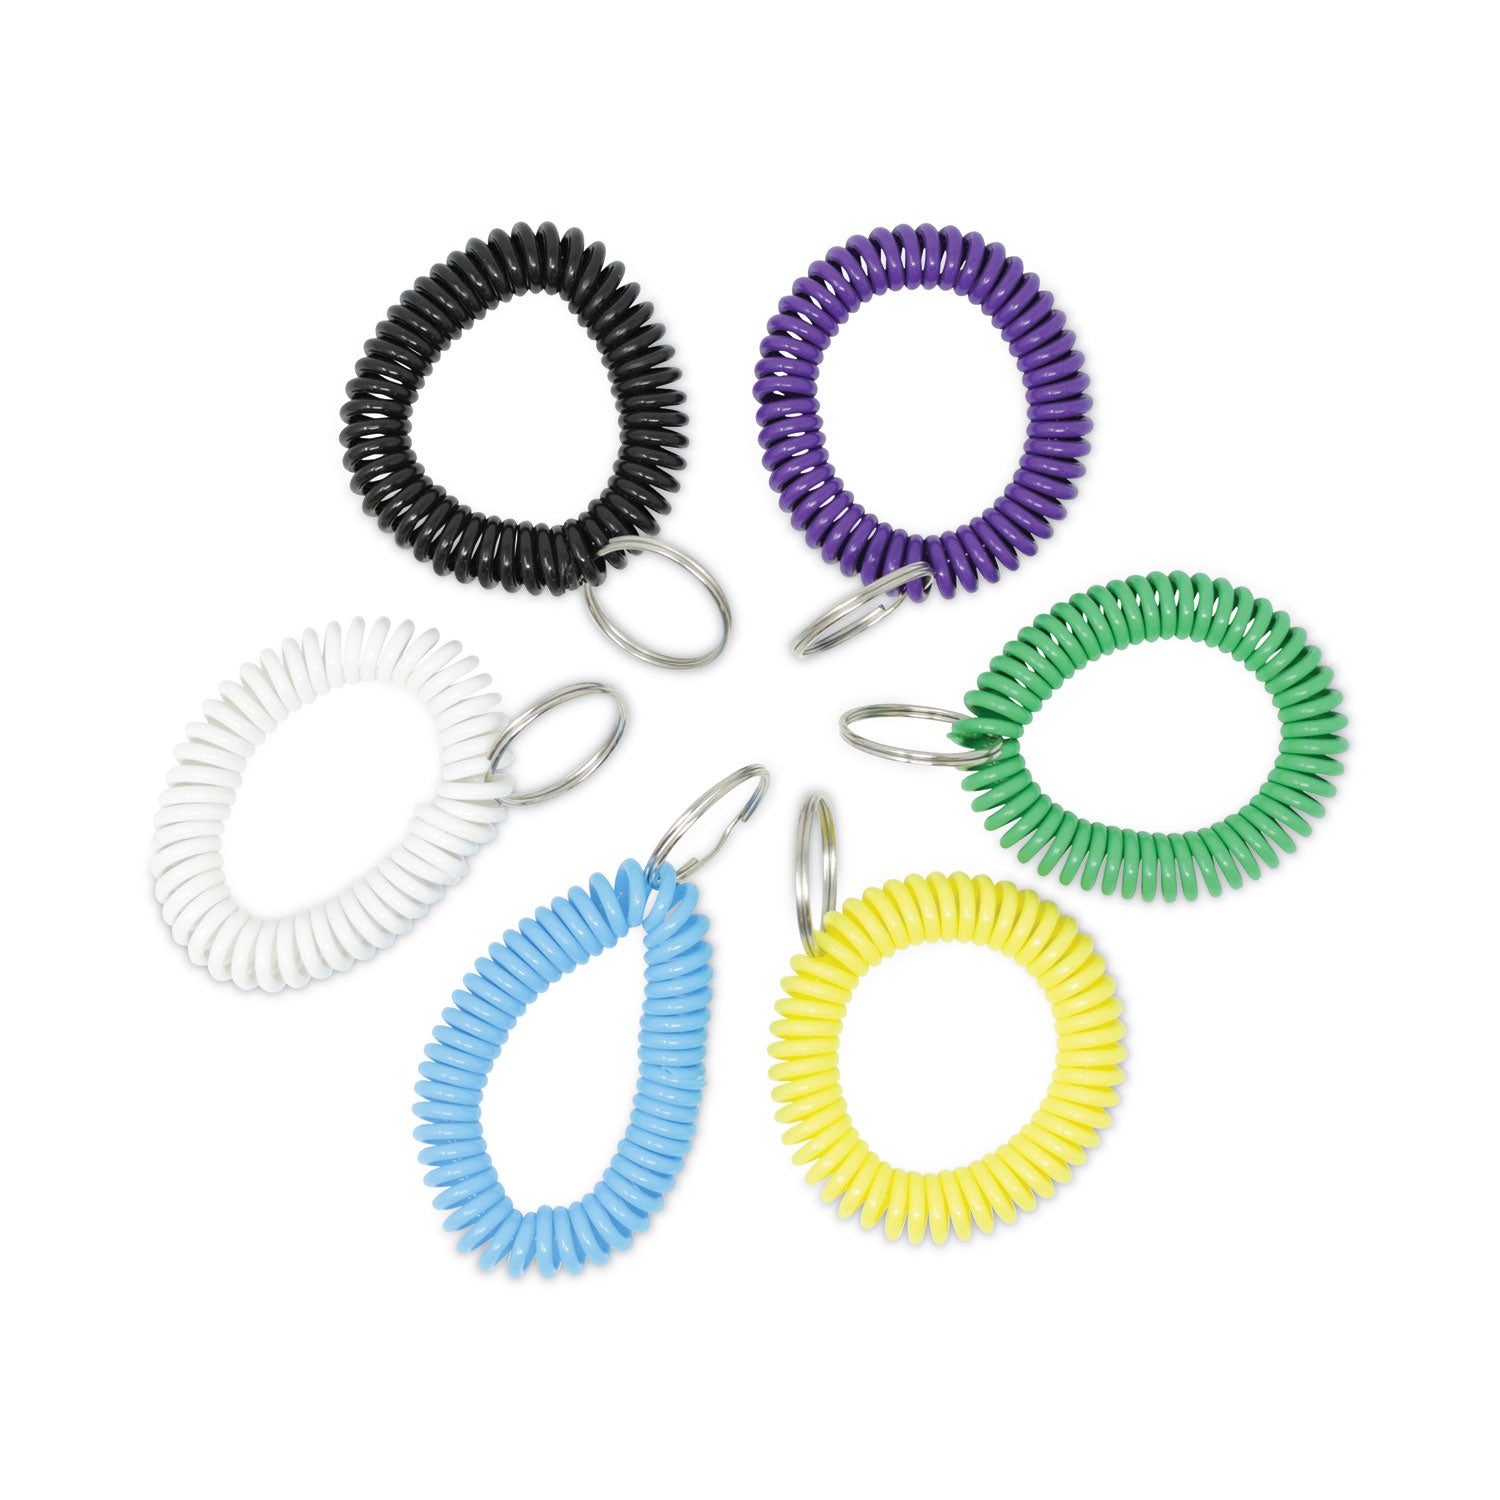 wrist-coil-plus-key-ring-plastic-assorted-colors-6-pack_unv56051 - 1